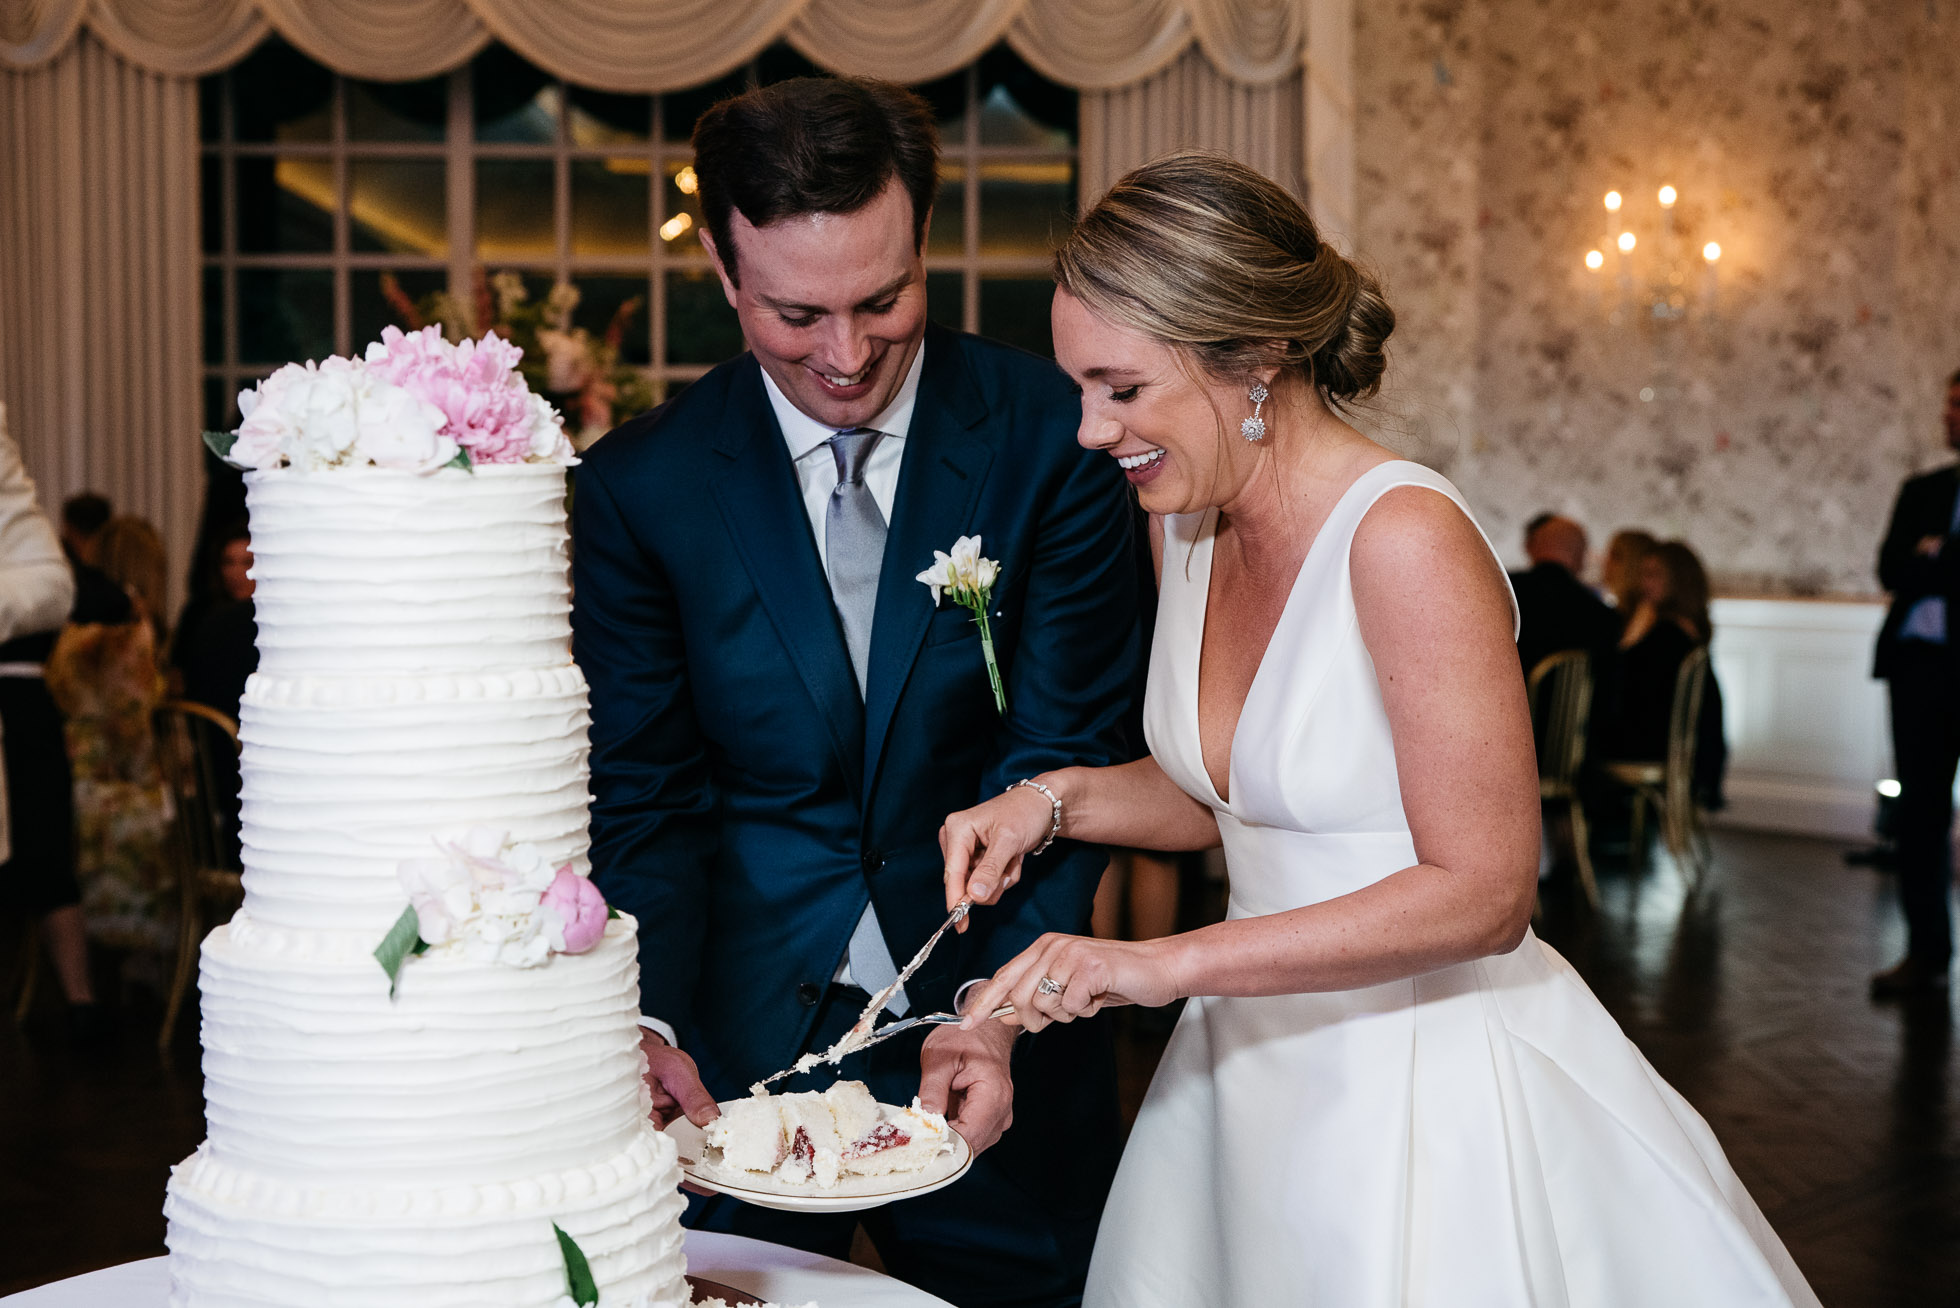 cake cutting Pittsburgh wedding photographer Mariah Fisher Photography-1.jpg